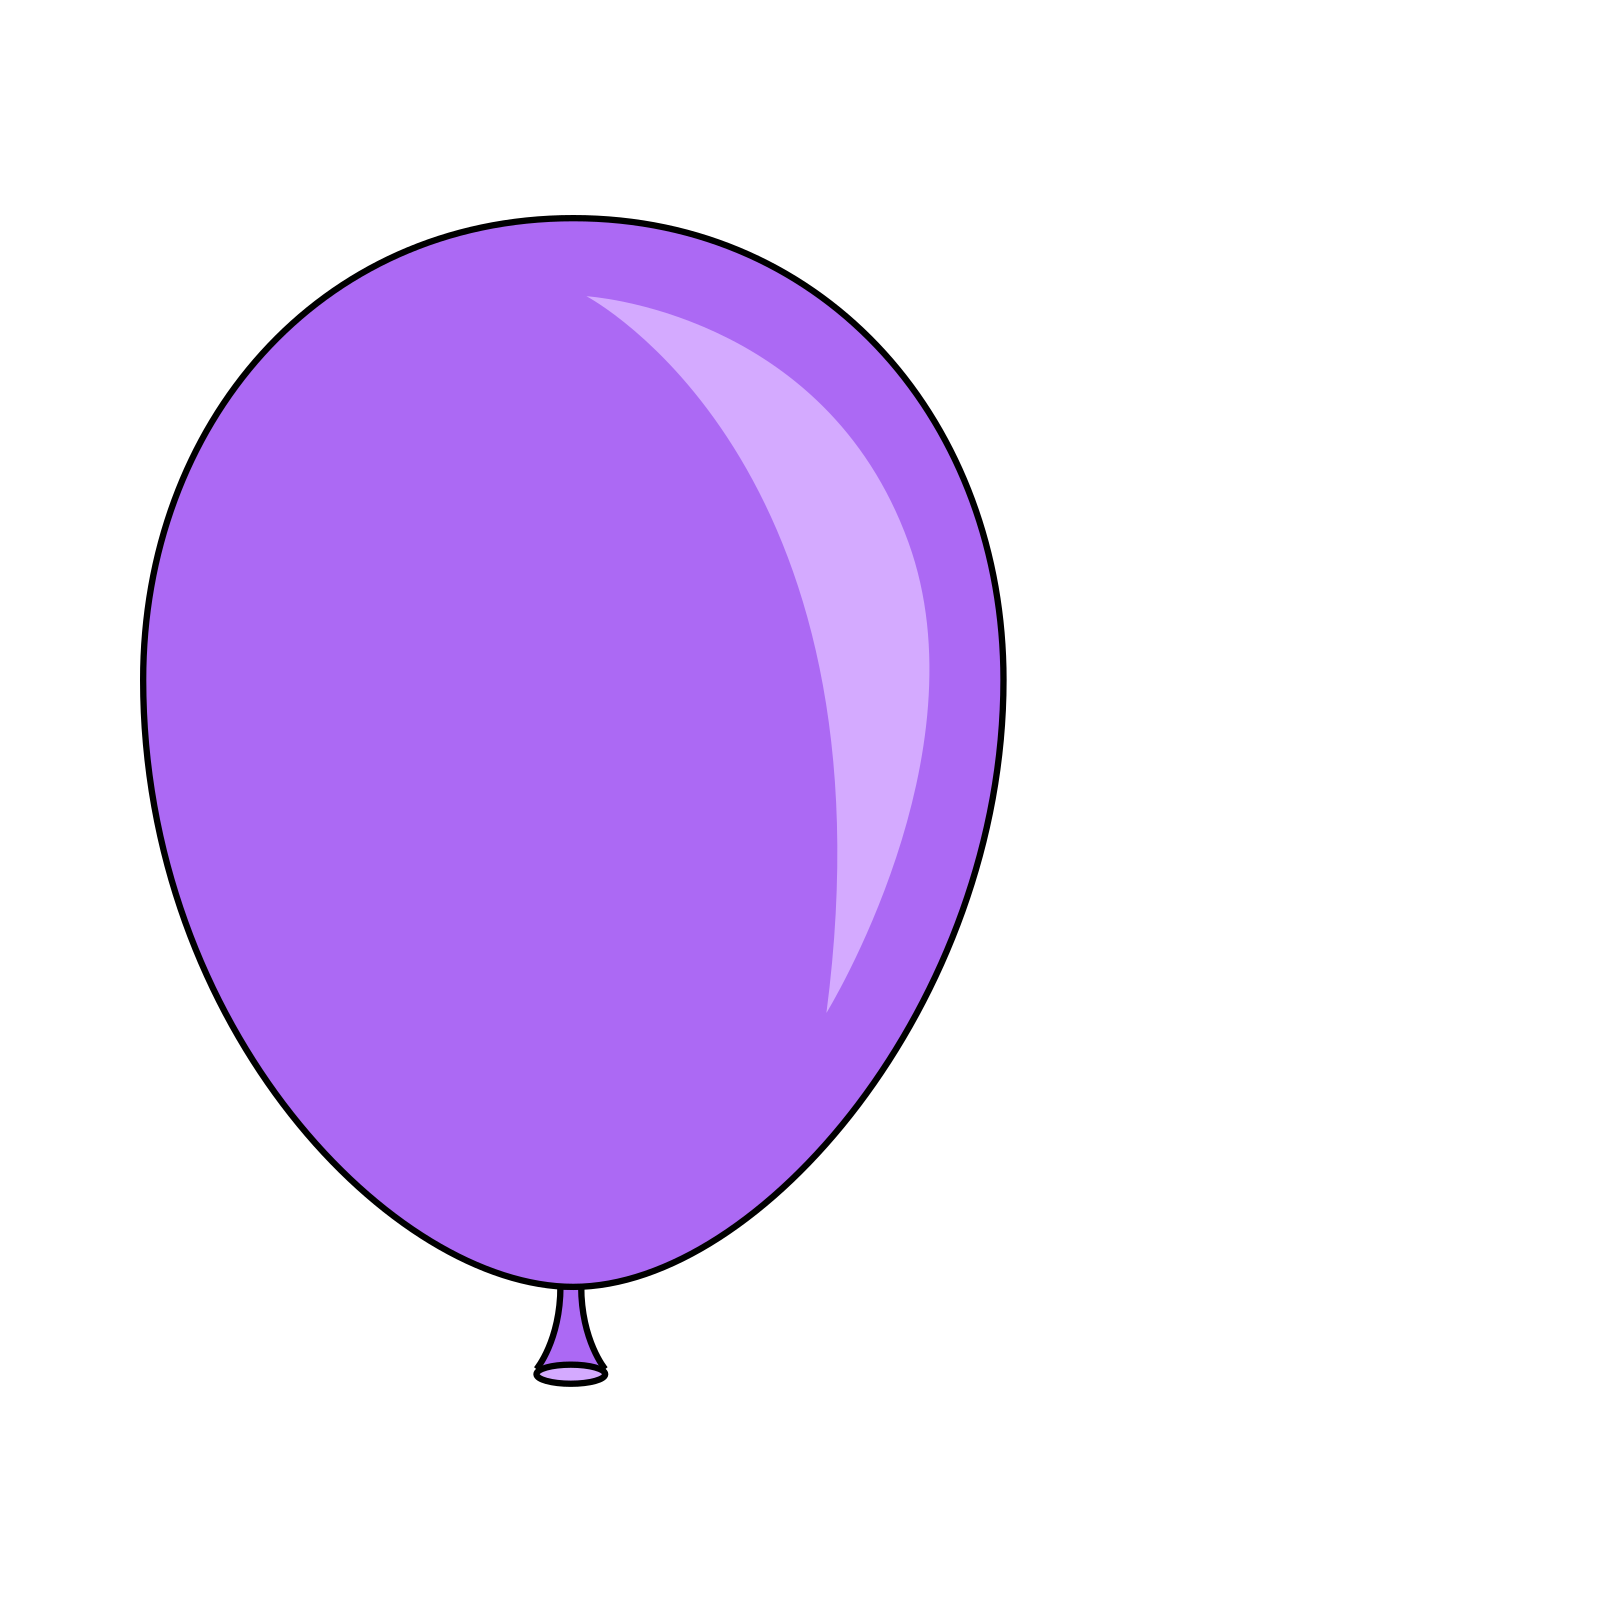 Latar belakang balon ungu PNG